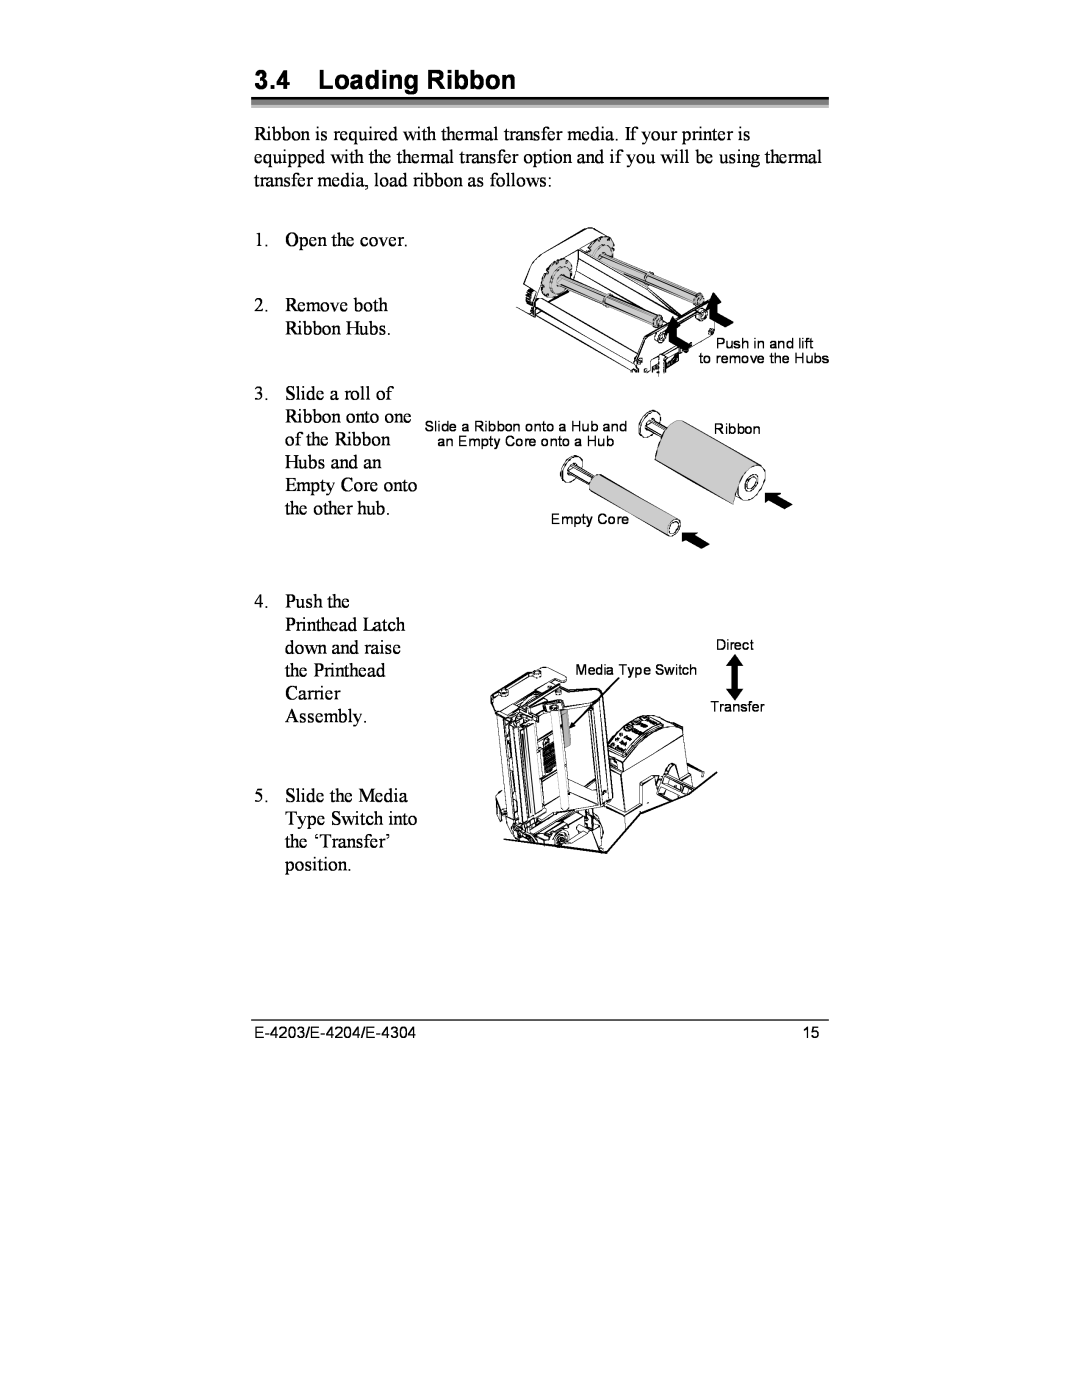 Datamax E-4204, E-4203, E-4304e manual Loading Ribbon 